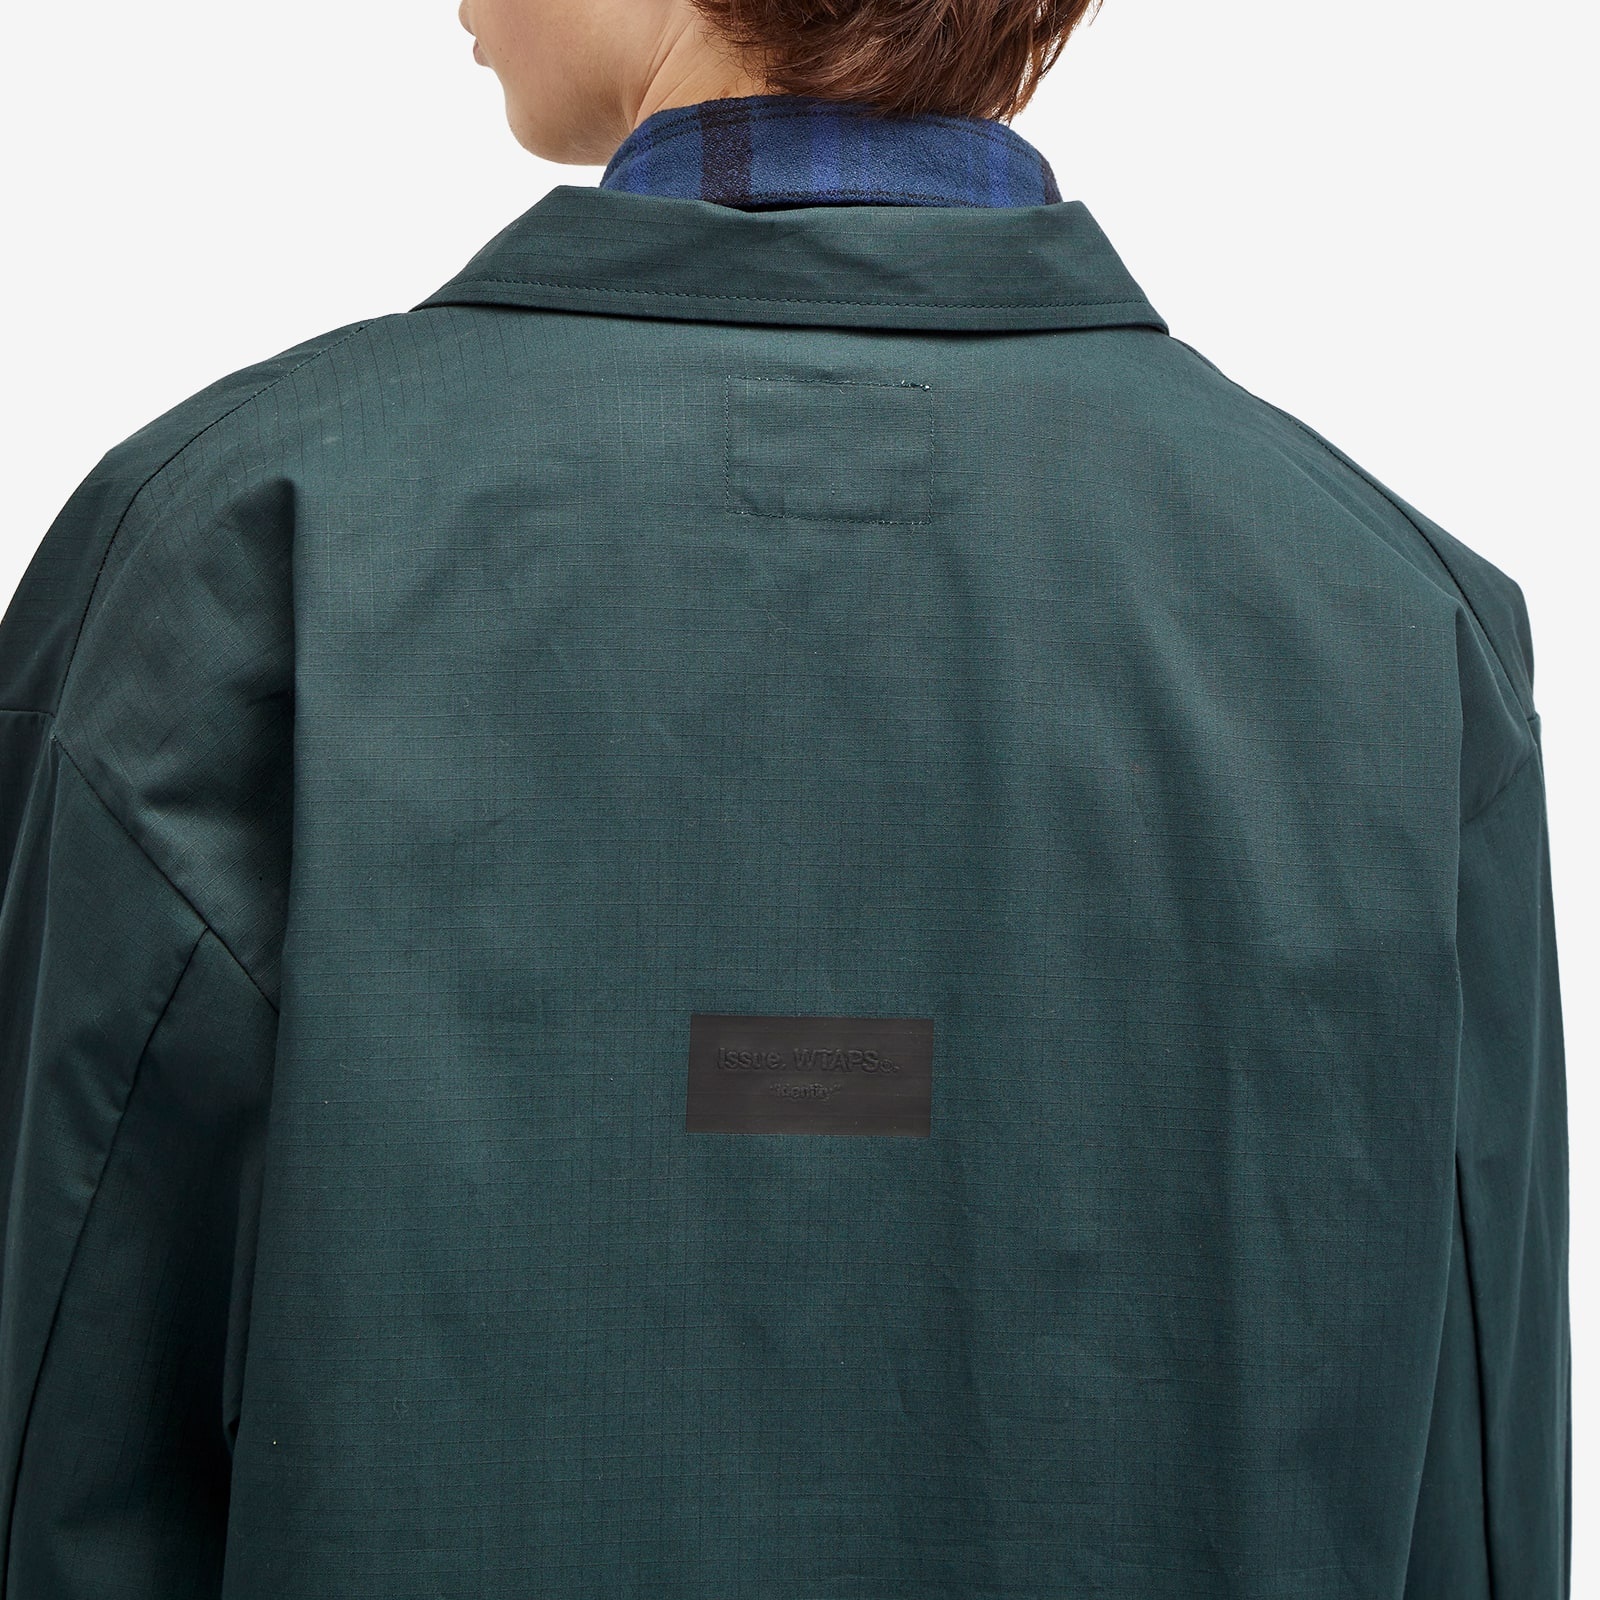 WTAPS 17 Shirt Jacket - 5